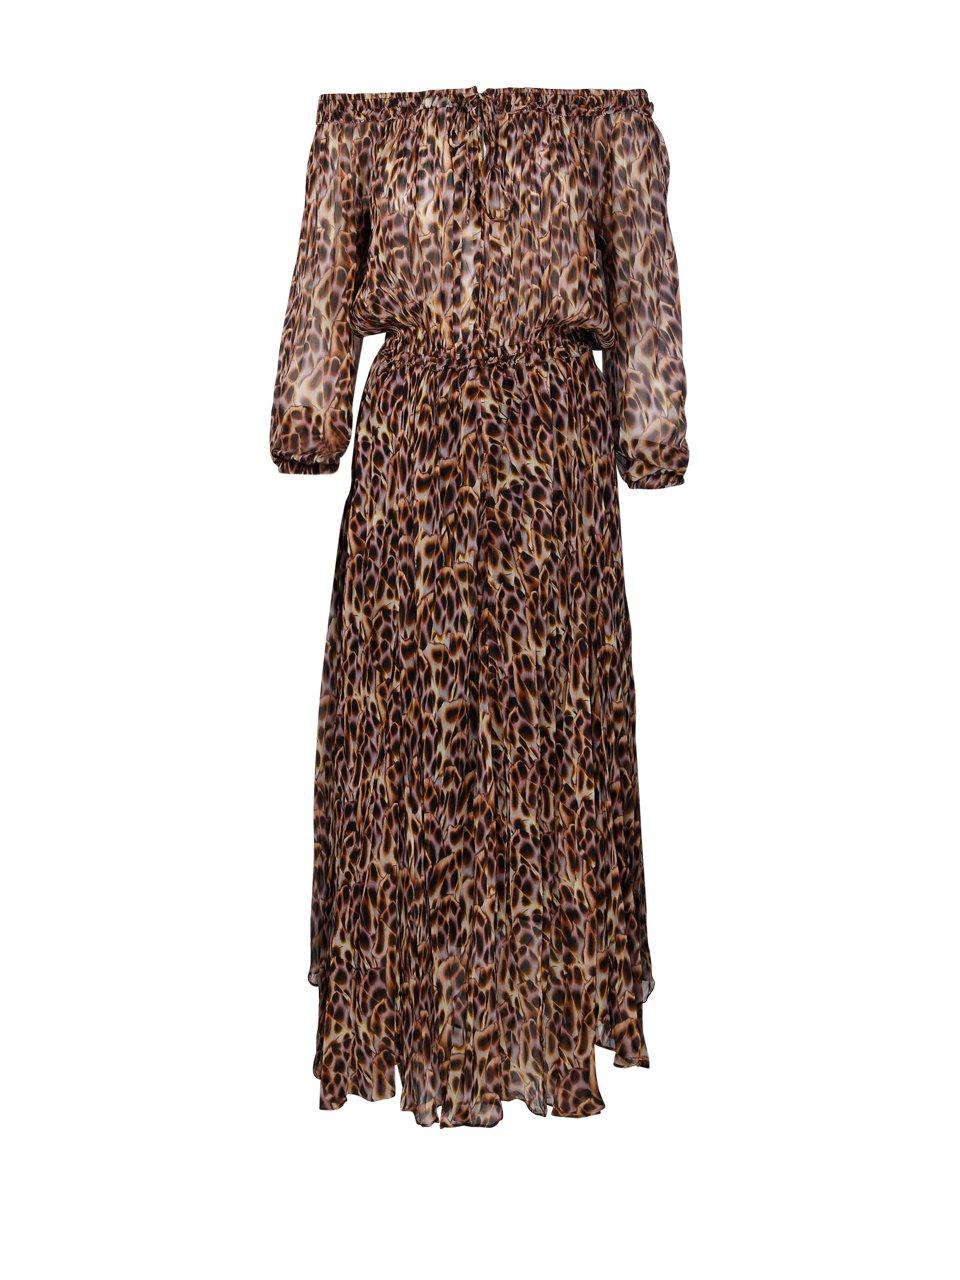 Marant Étoile Leopard-printed Drawstring Dress